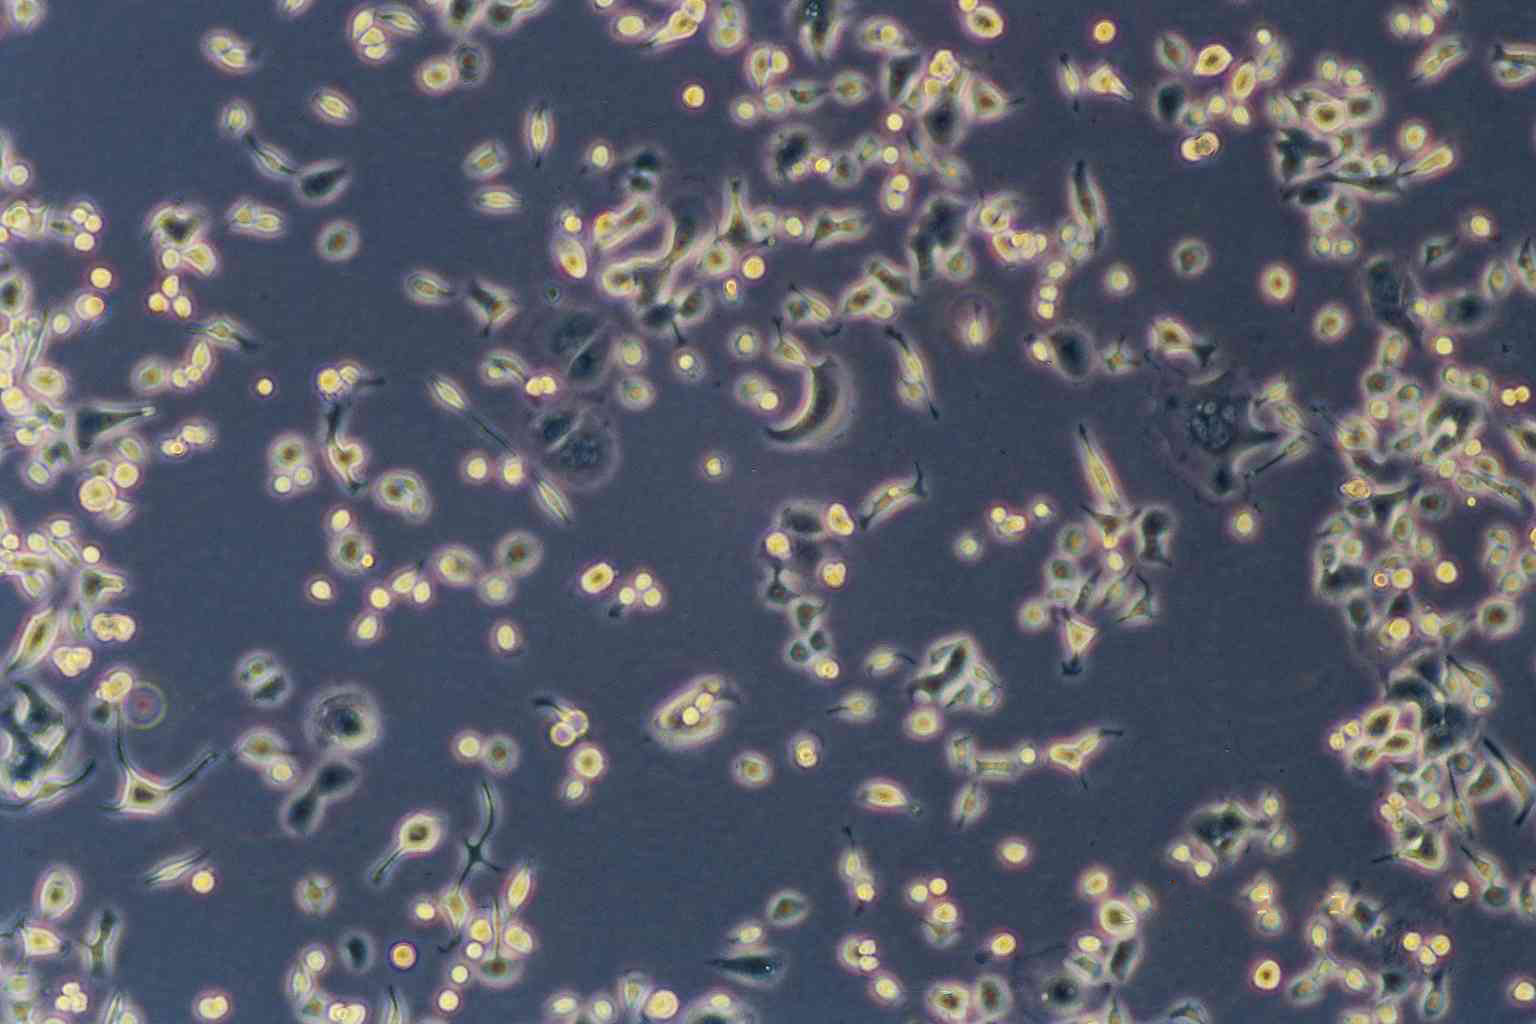 NCI-H2291 Cell|人肺癌细胞,NCI-H2291 Cell